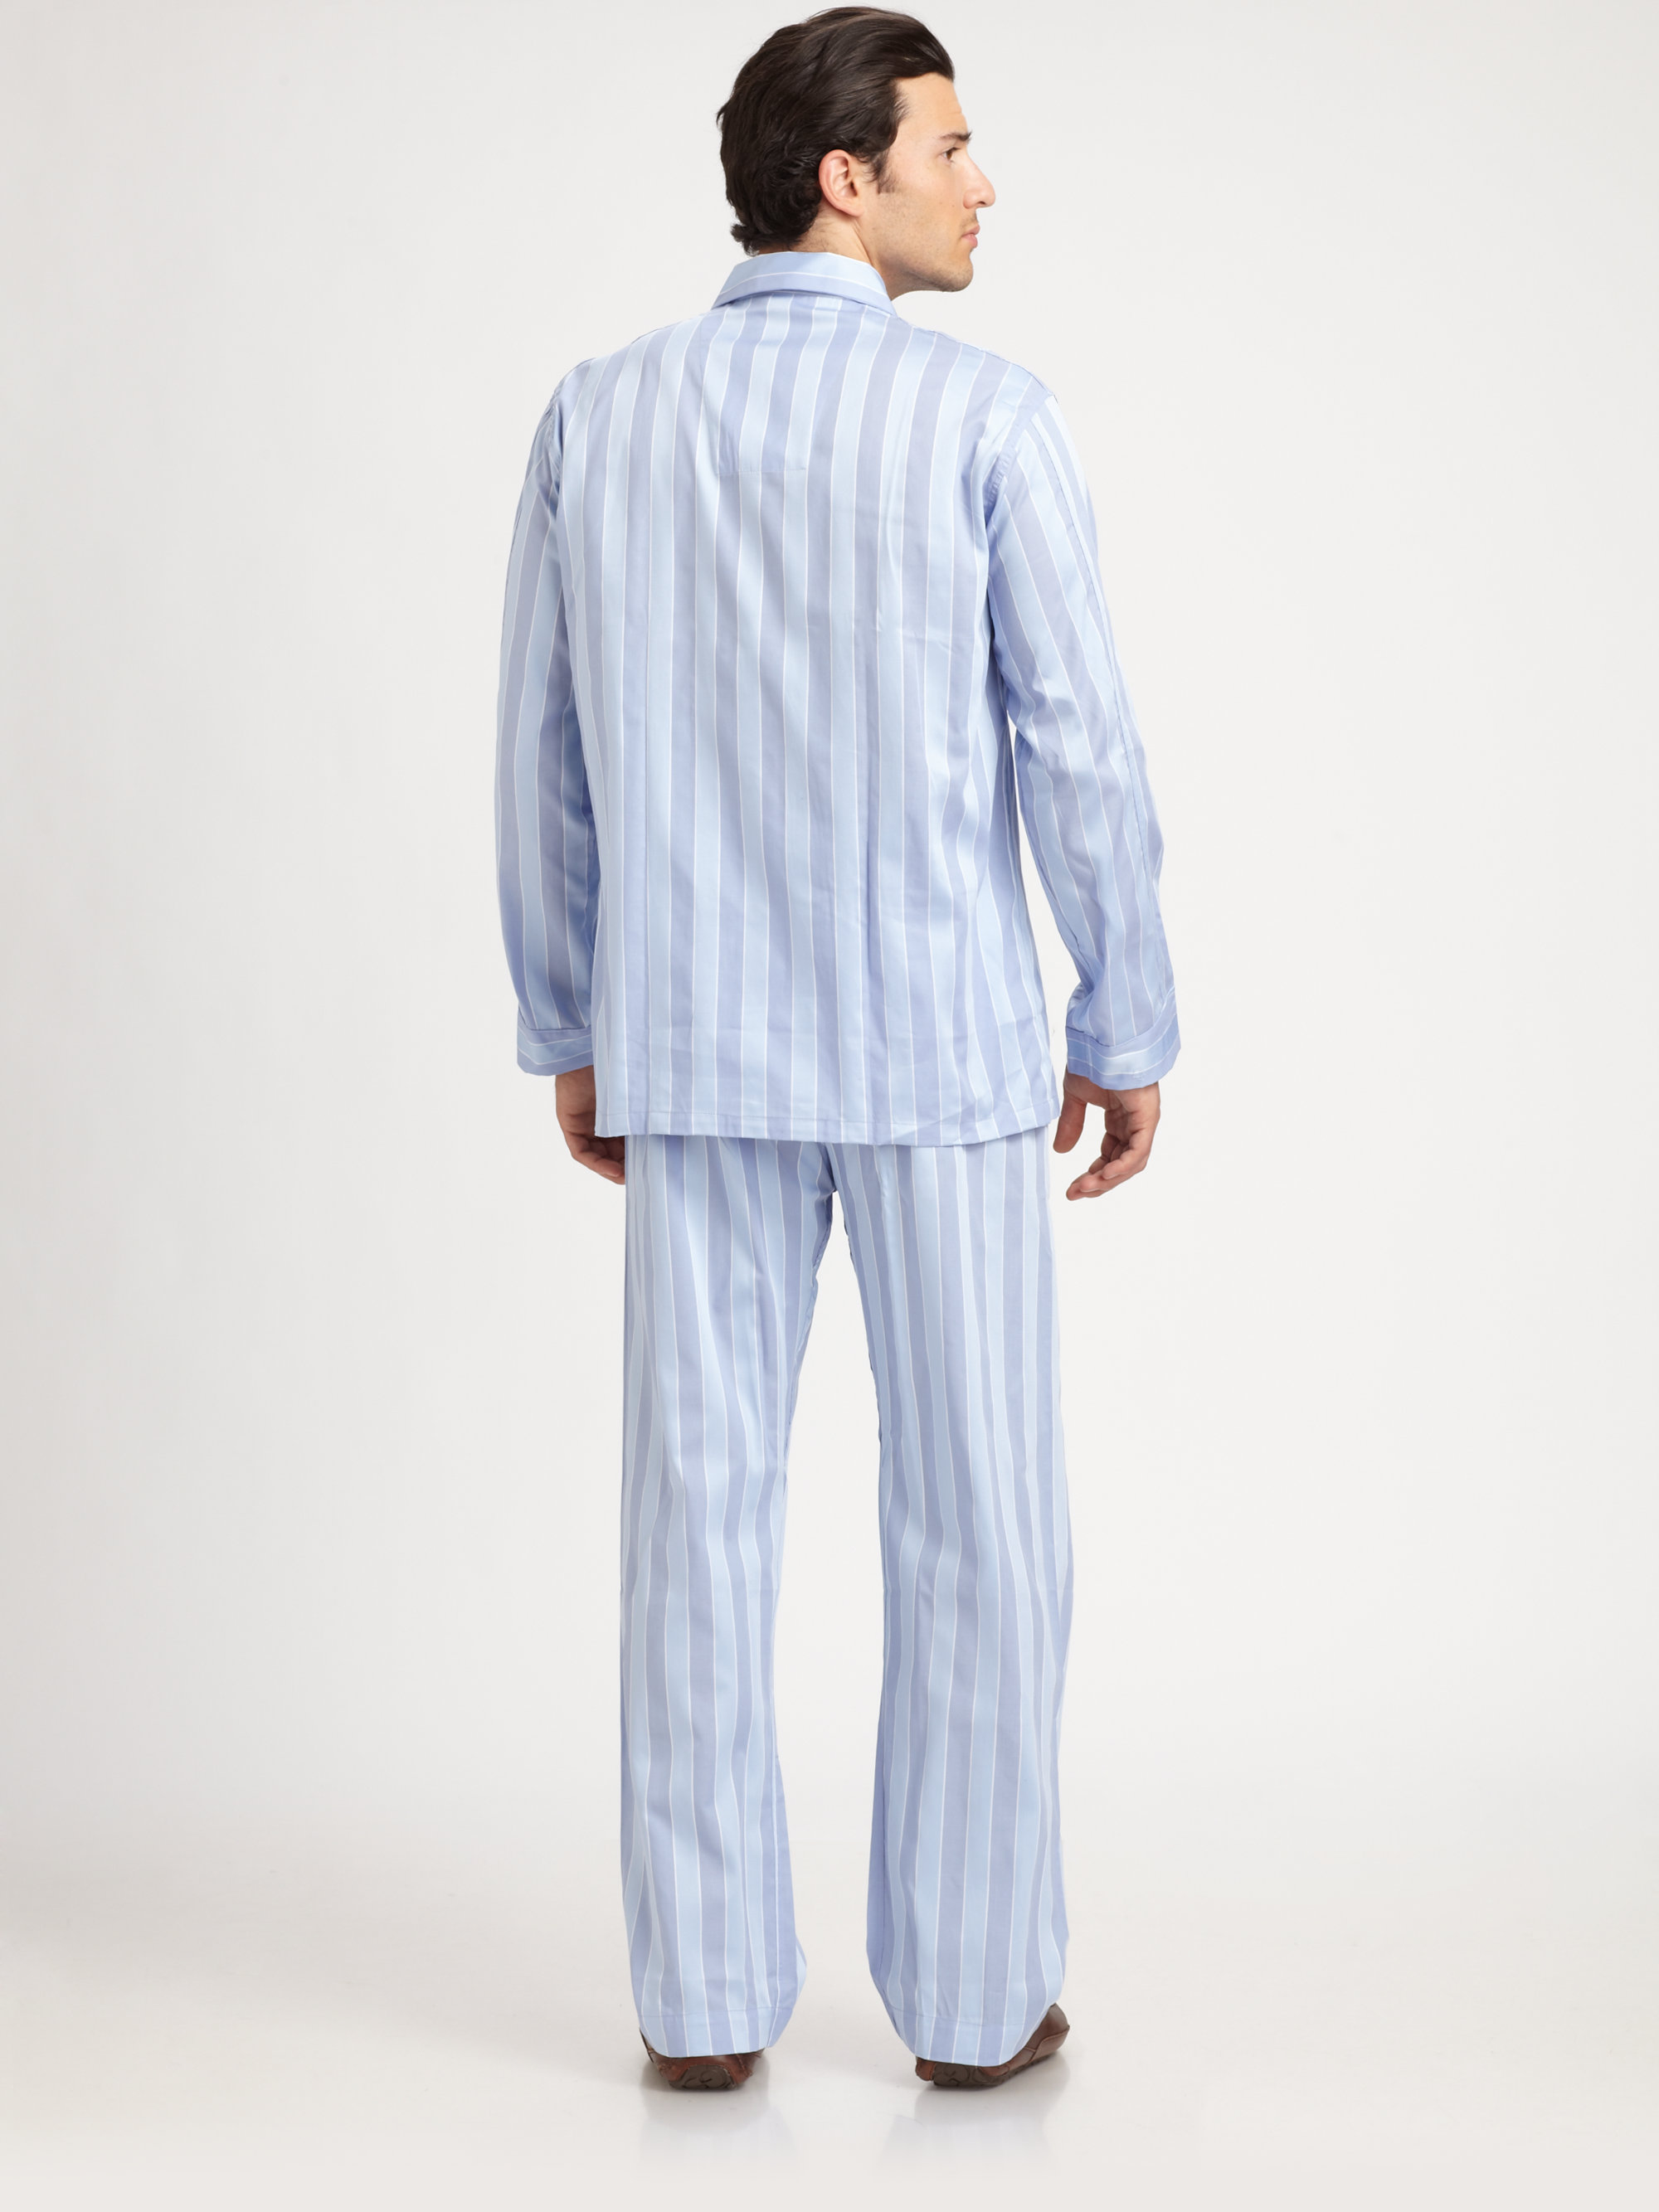 Derek Rose Savile Collection Pure Cotton Pyjamas Medium/40”